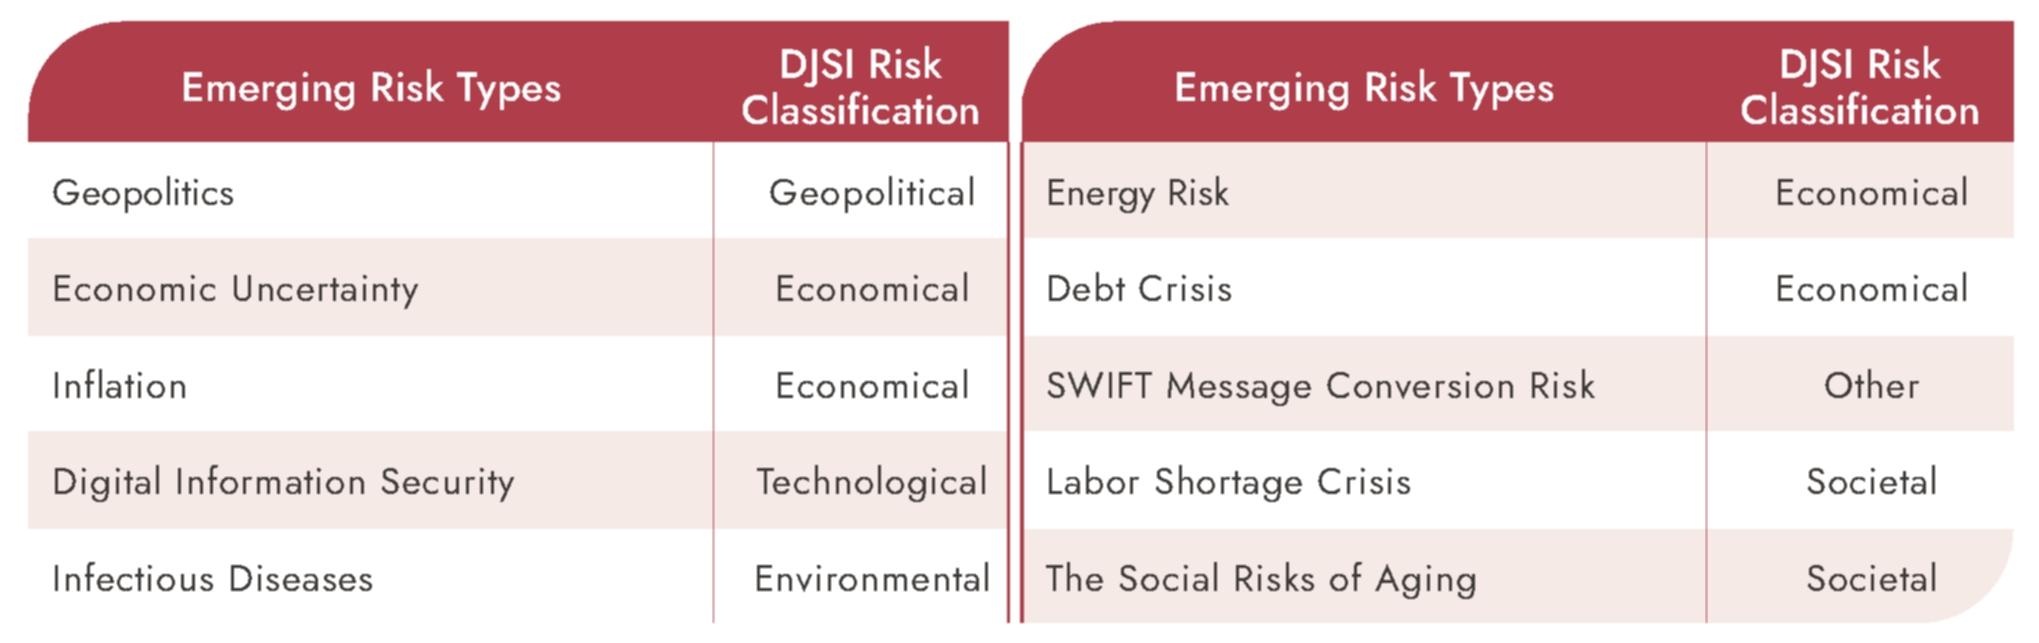 Emerging Risk Identification Results